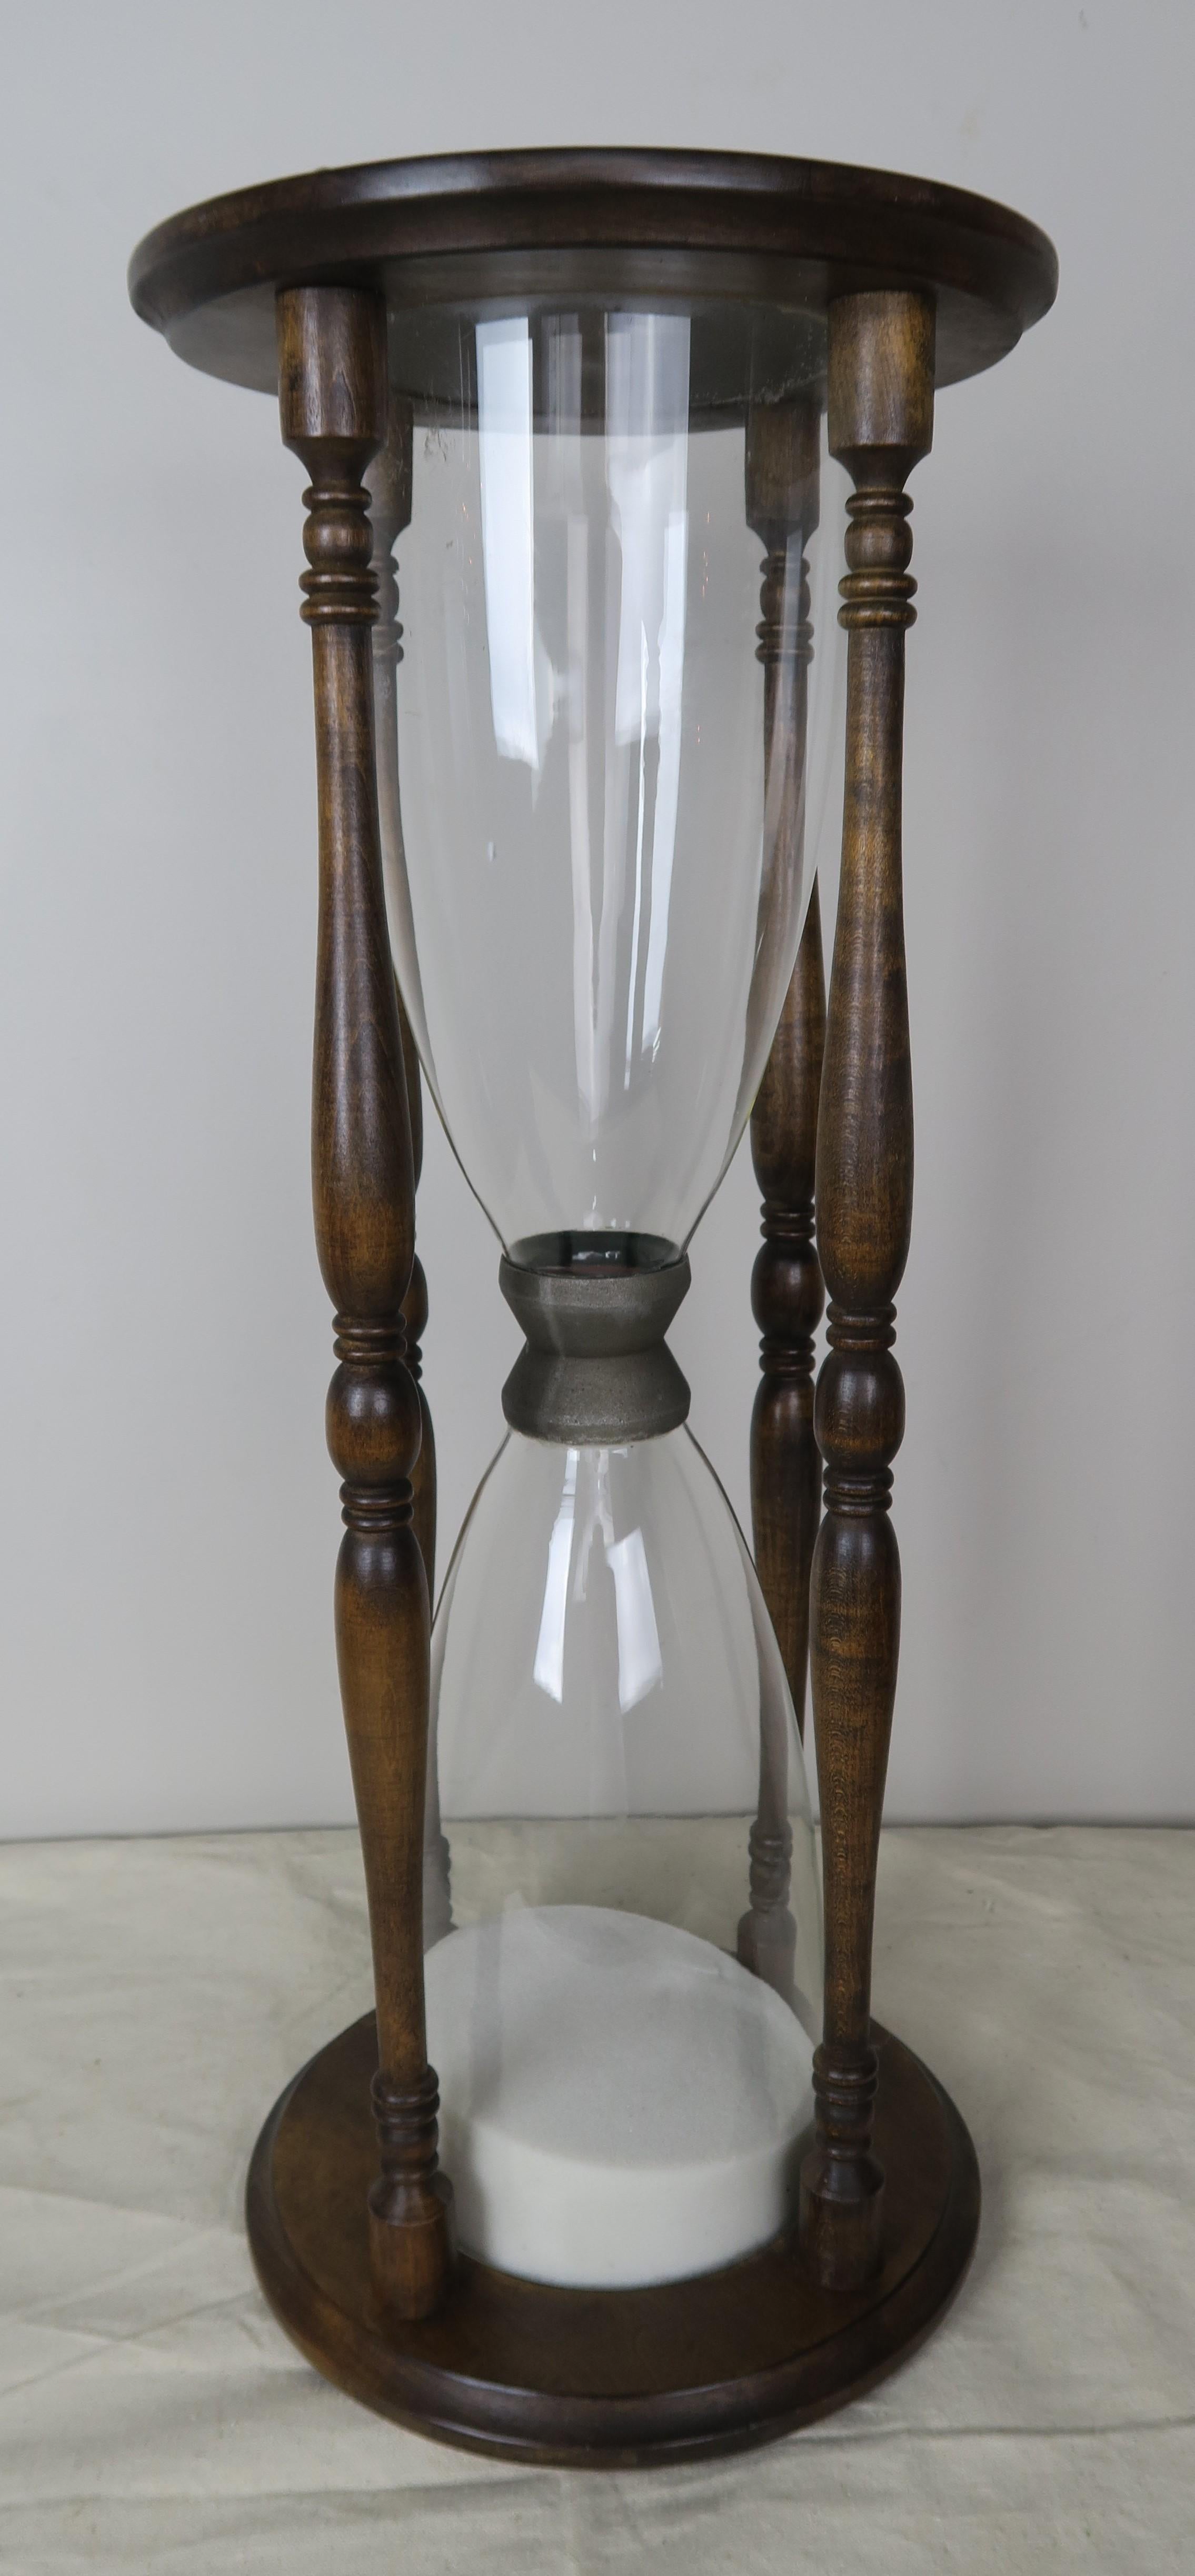 Monumental scale English walnut and glass hour glass.